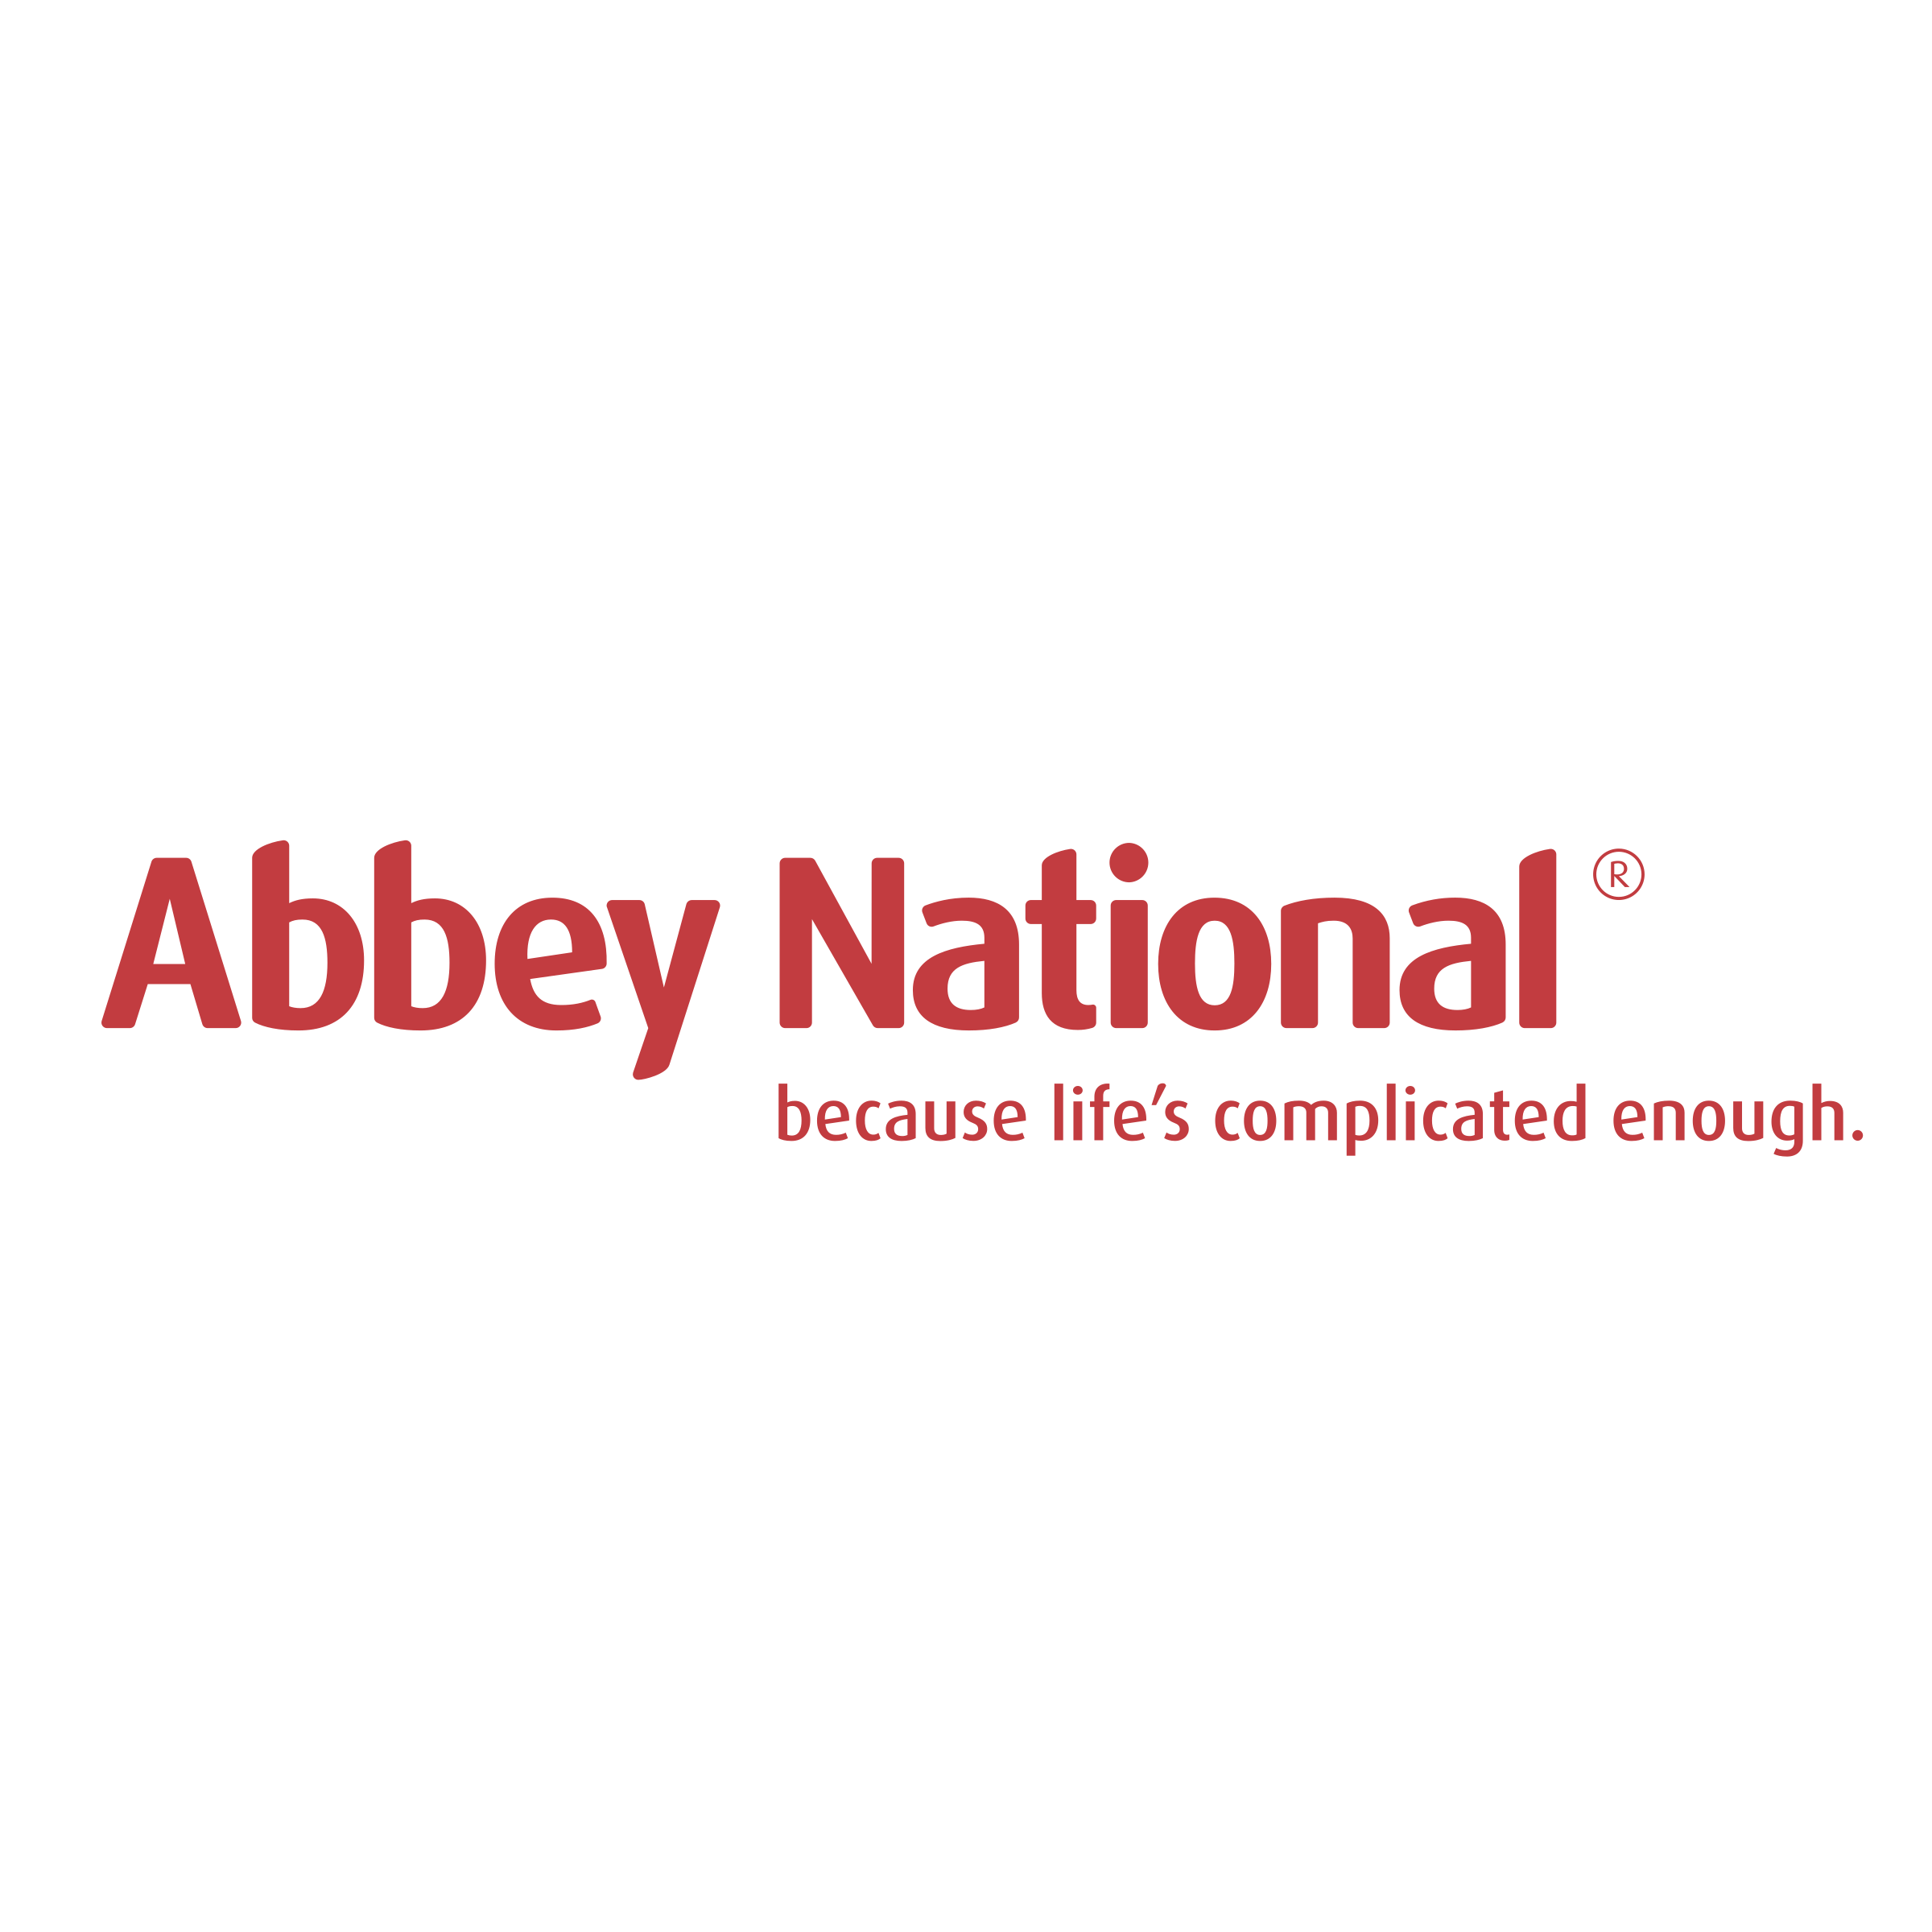 Abbey Logo - Abbey National Logo PNG Transparent & SVG Vector